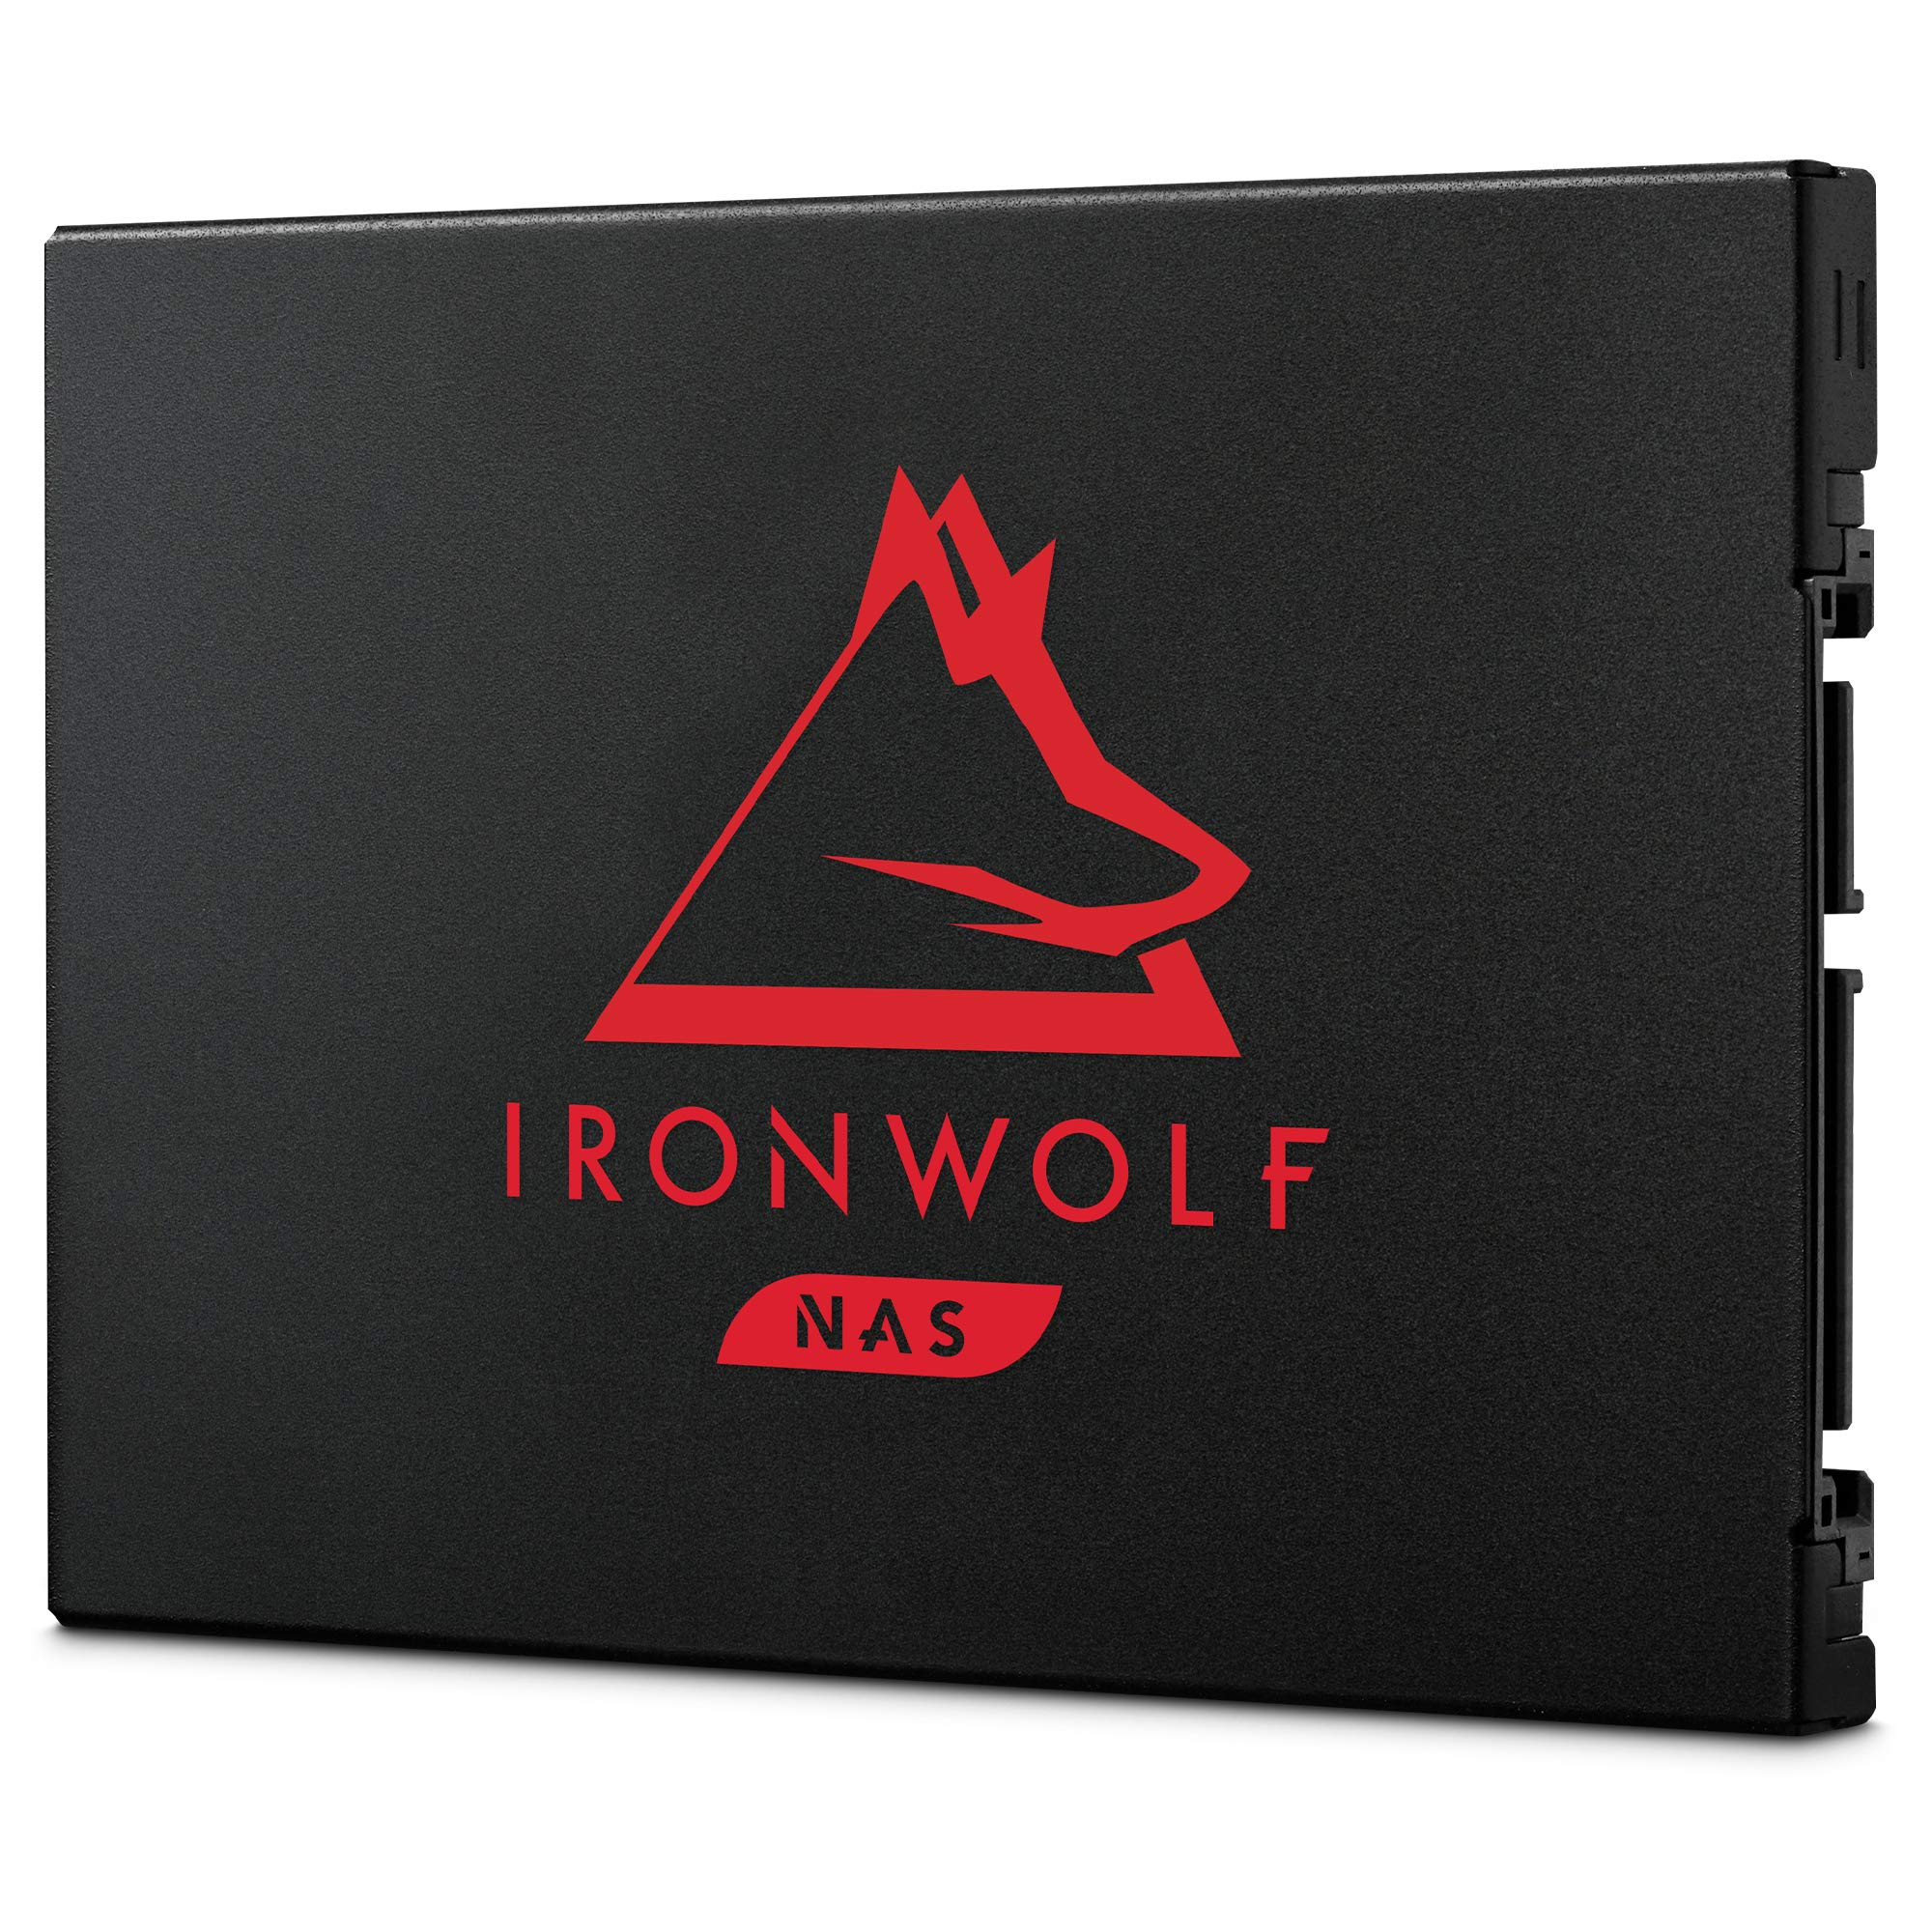 Seagate シーゲイト IronWolf 125 SSD 500GB NAS 内蔵ソリッドステートドライブ - 2.5インチ SATA 6Gbs 速